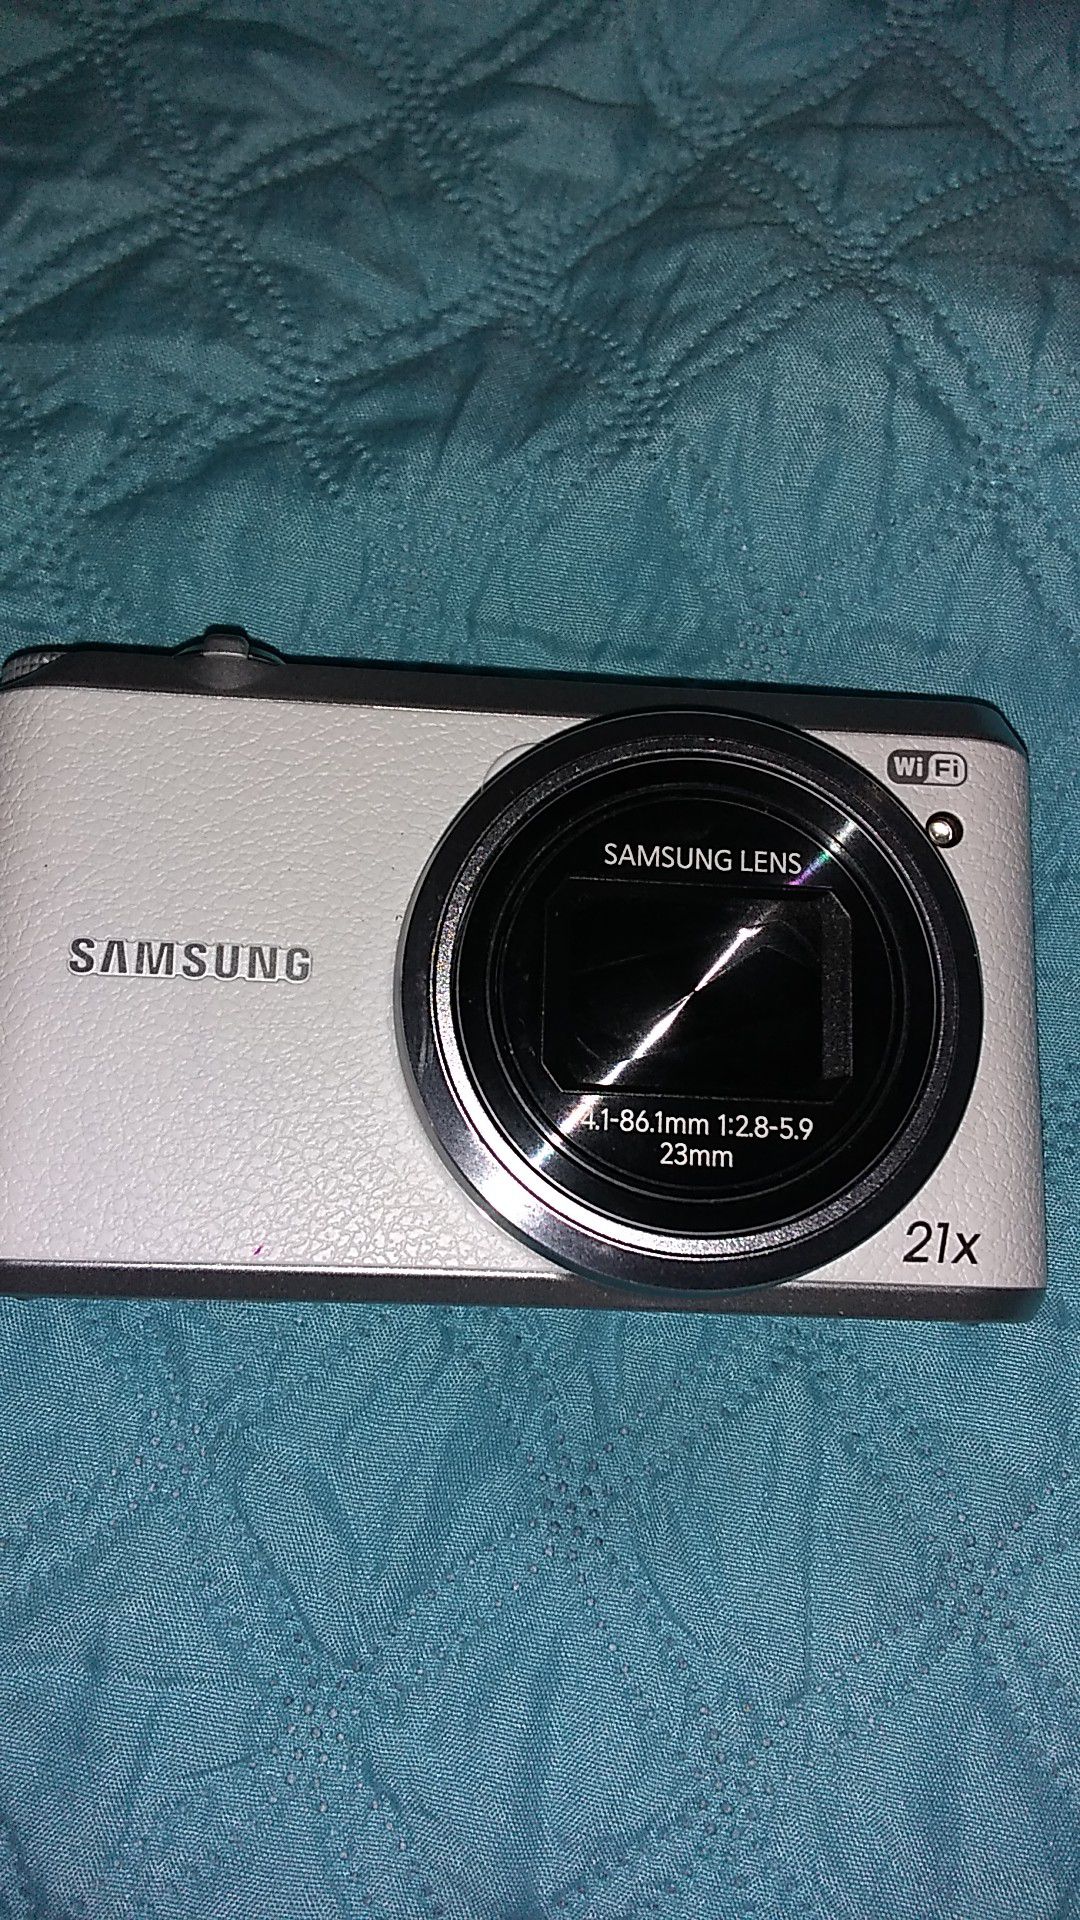 Samsung digital wifi camera